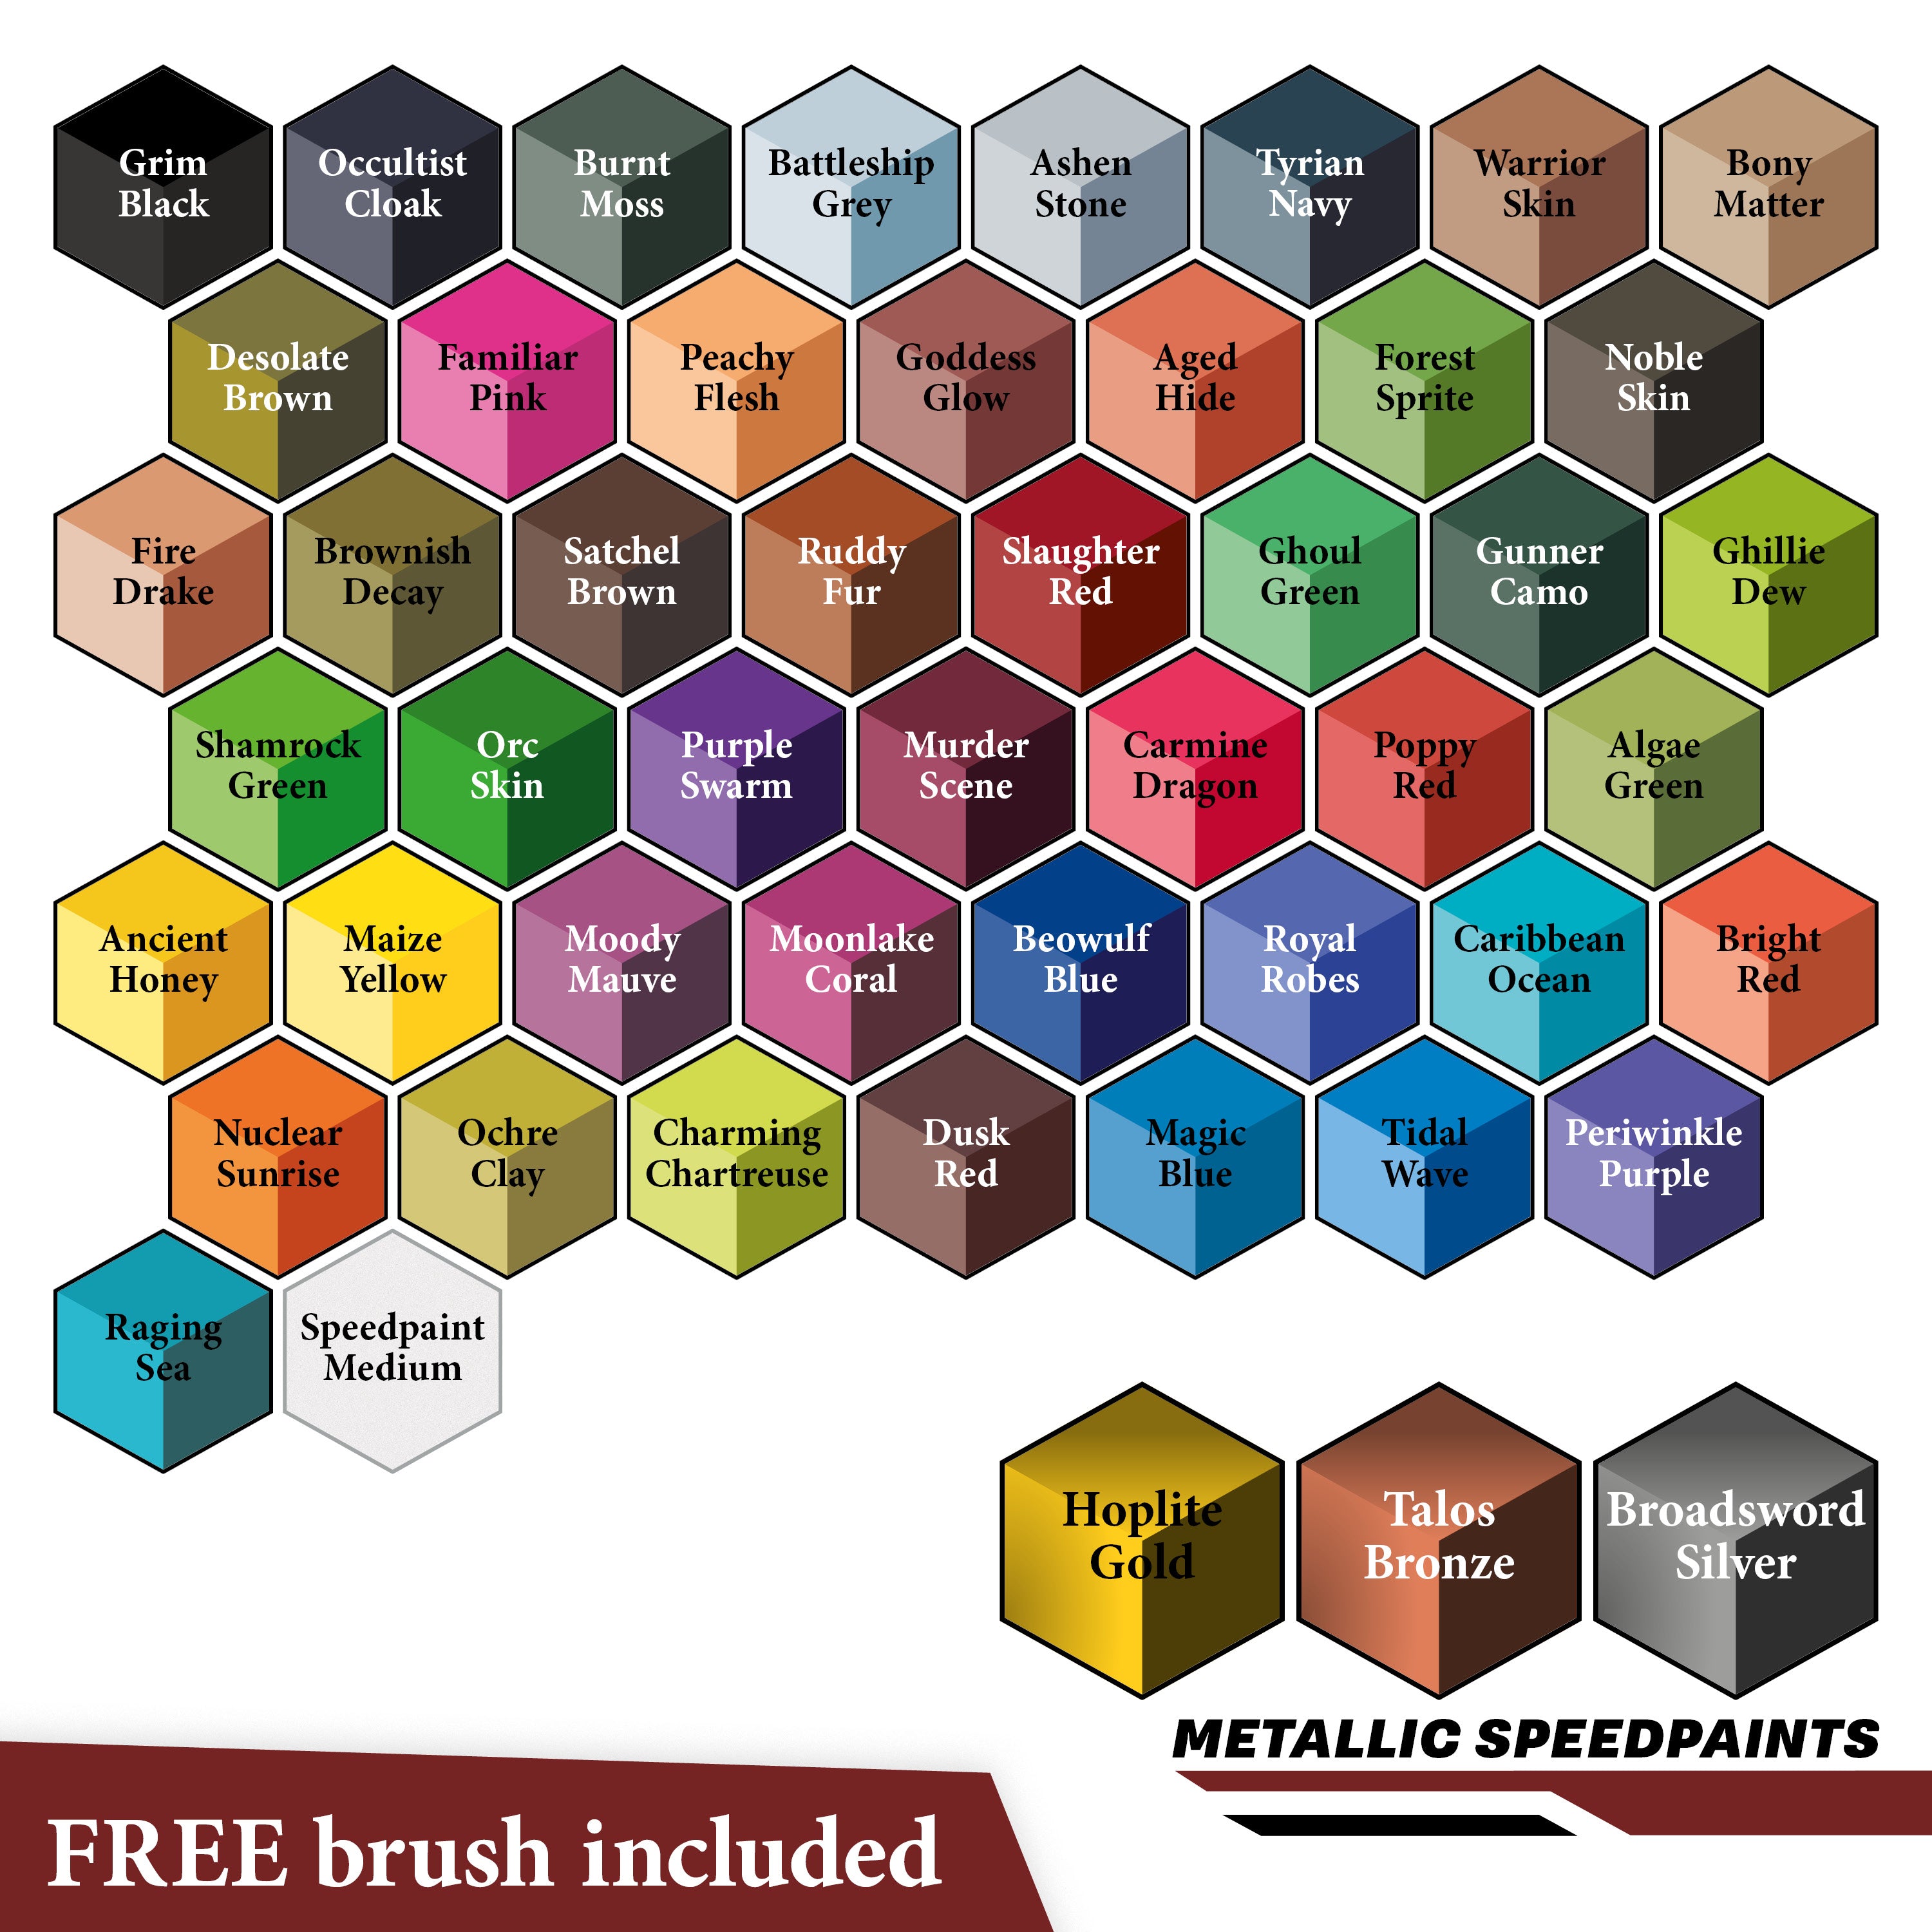 The Army Painter: Speedpaint Mega Set 2.0 (WP8057) - New Formula – Gnomish  Bazaar